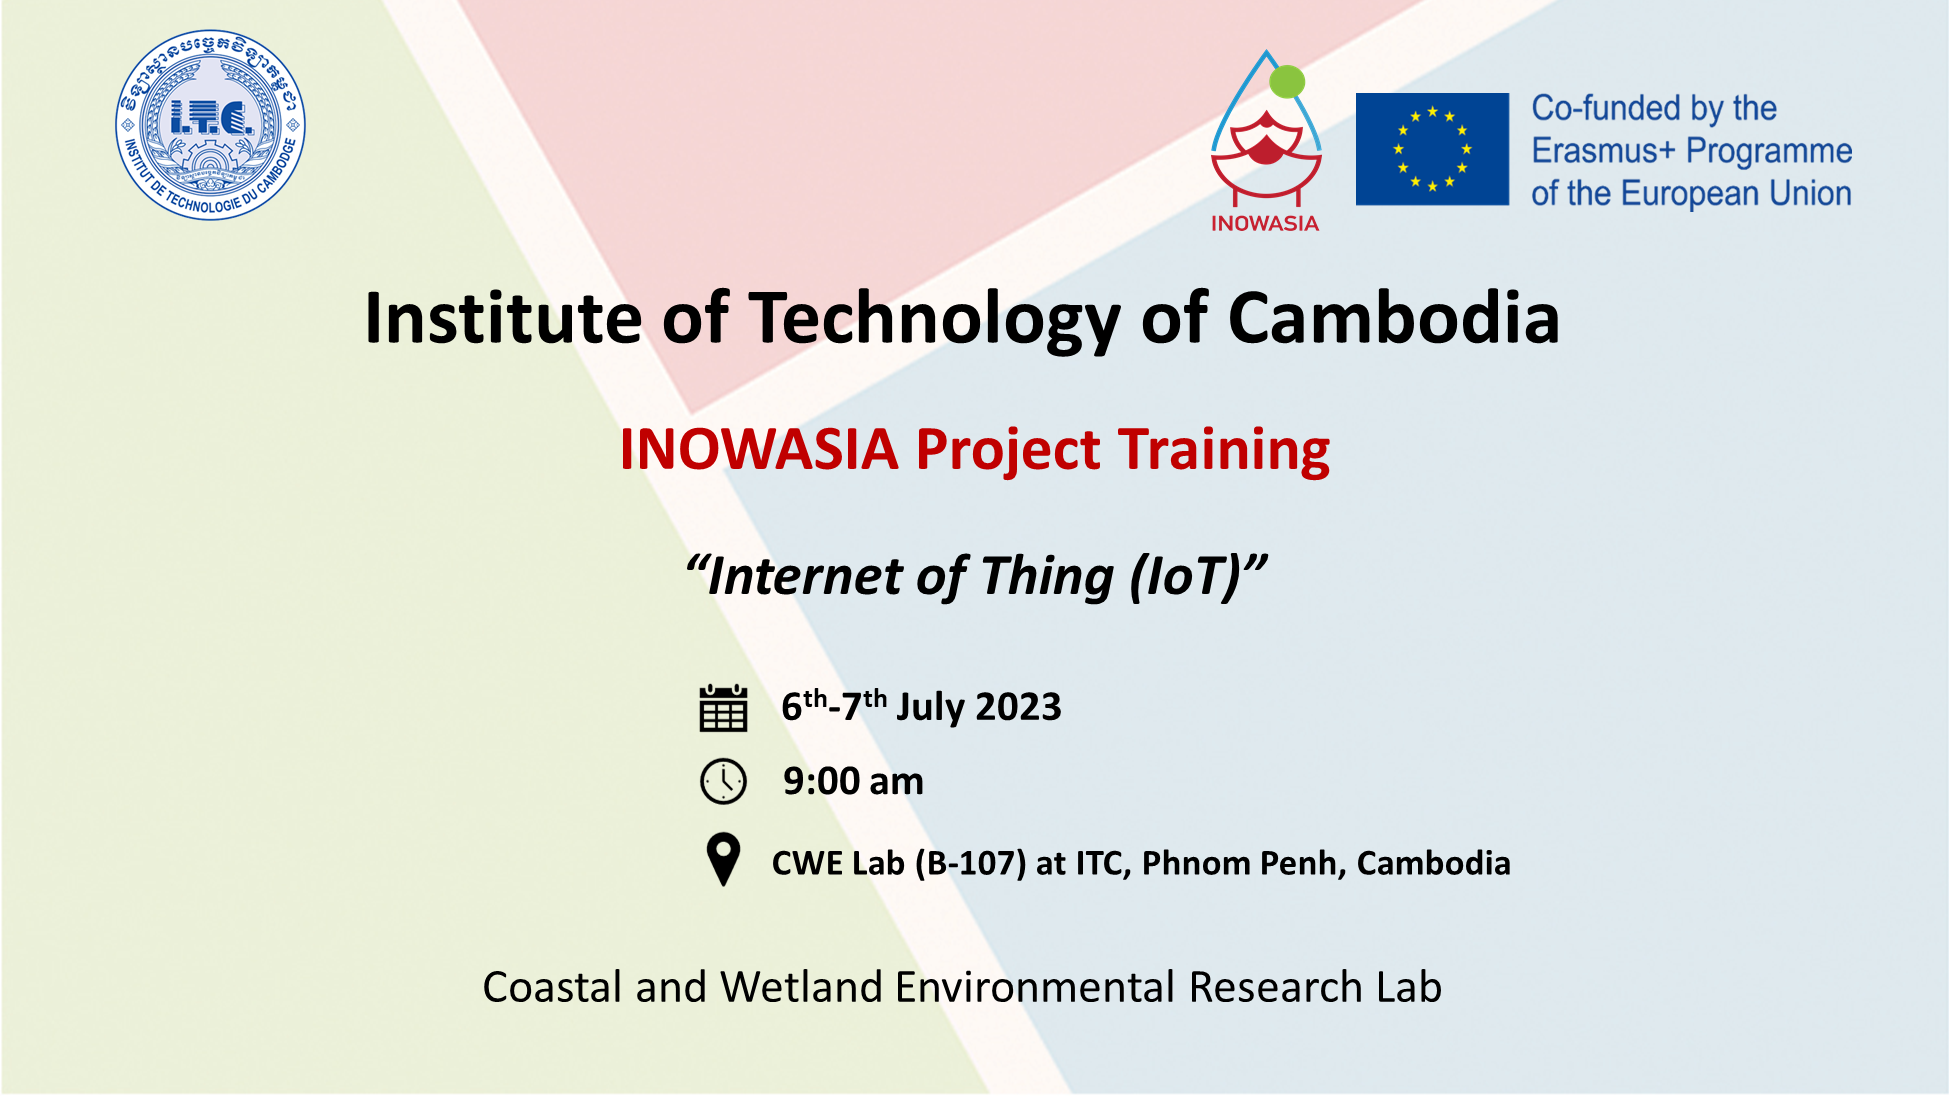 INOWASIA Project Training on “INTERNET OF THINGS”